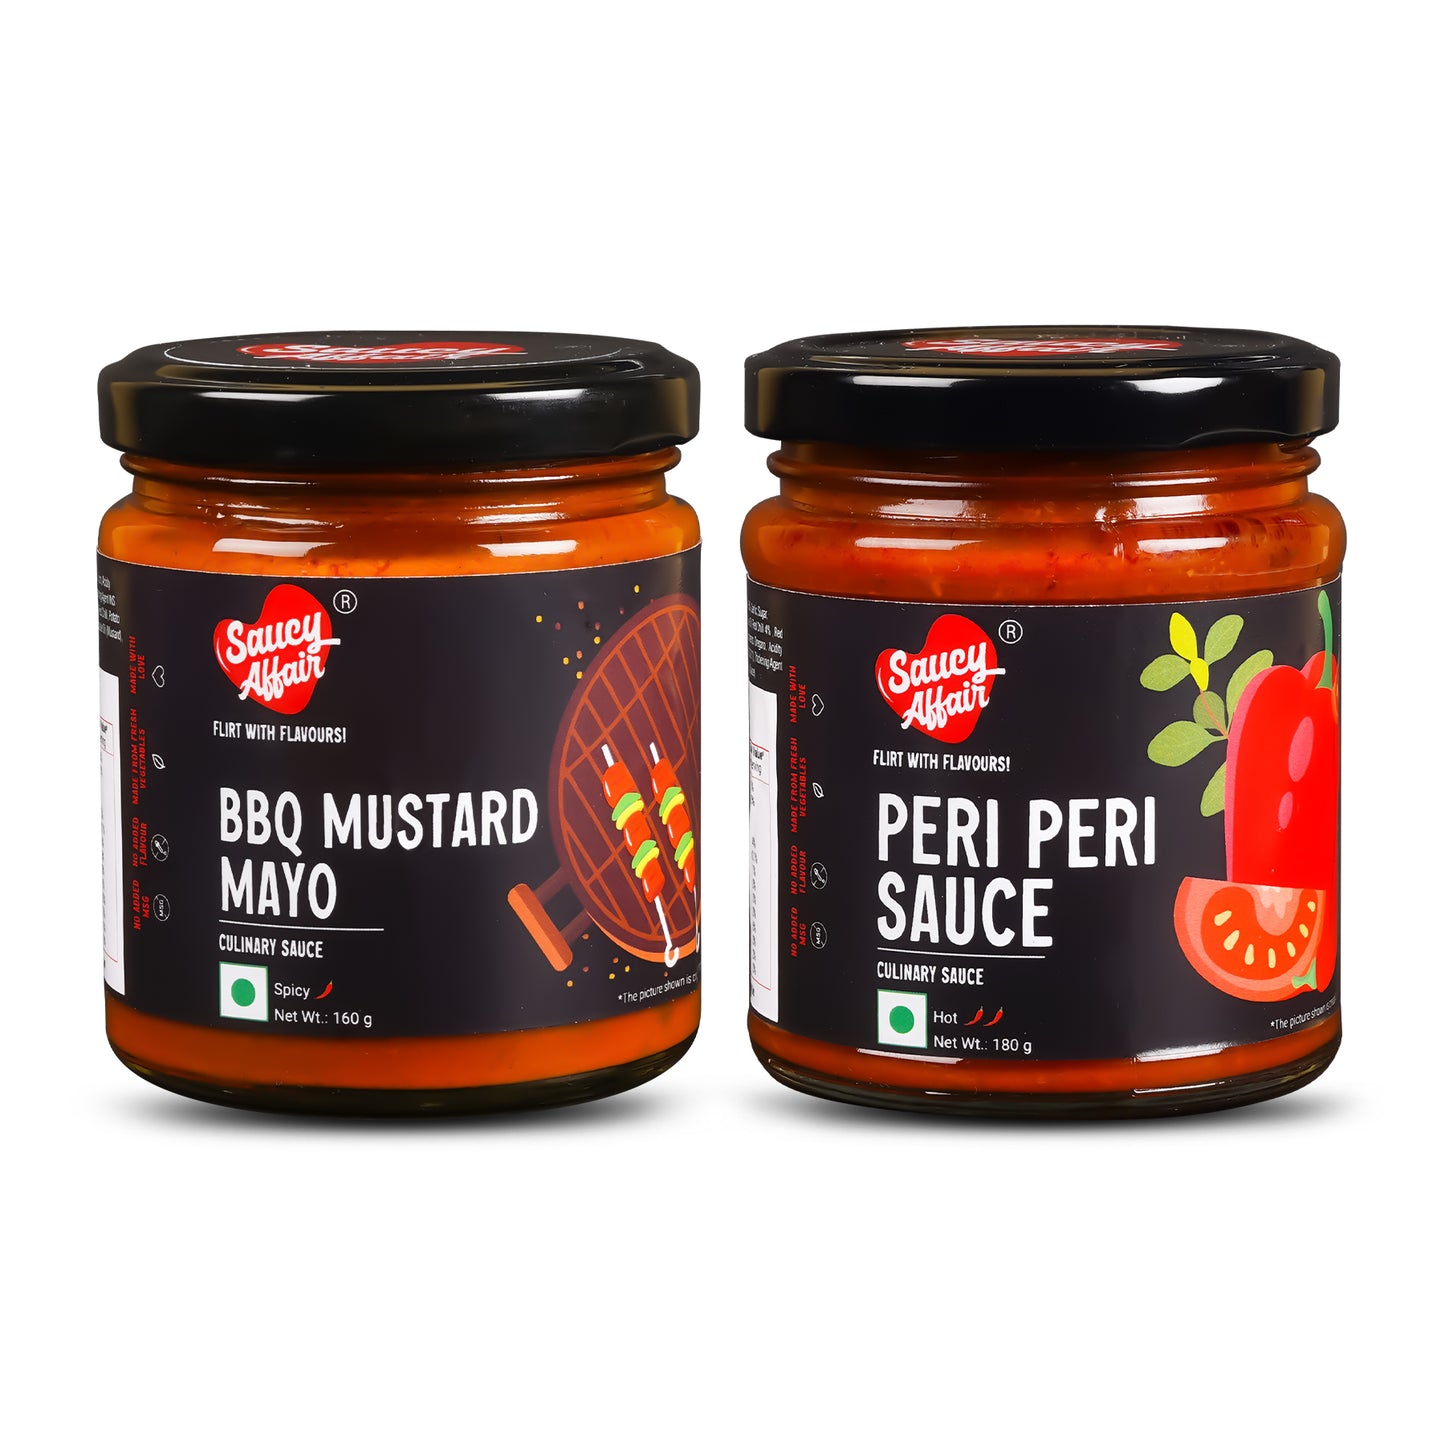 BBQ Mustard Mayo 160g +  Peri Peri Sauce - 180g  Combo (Pack of 2)